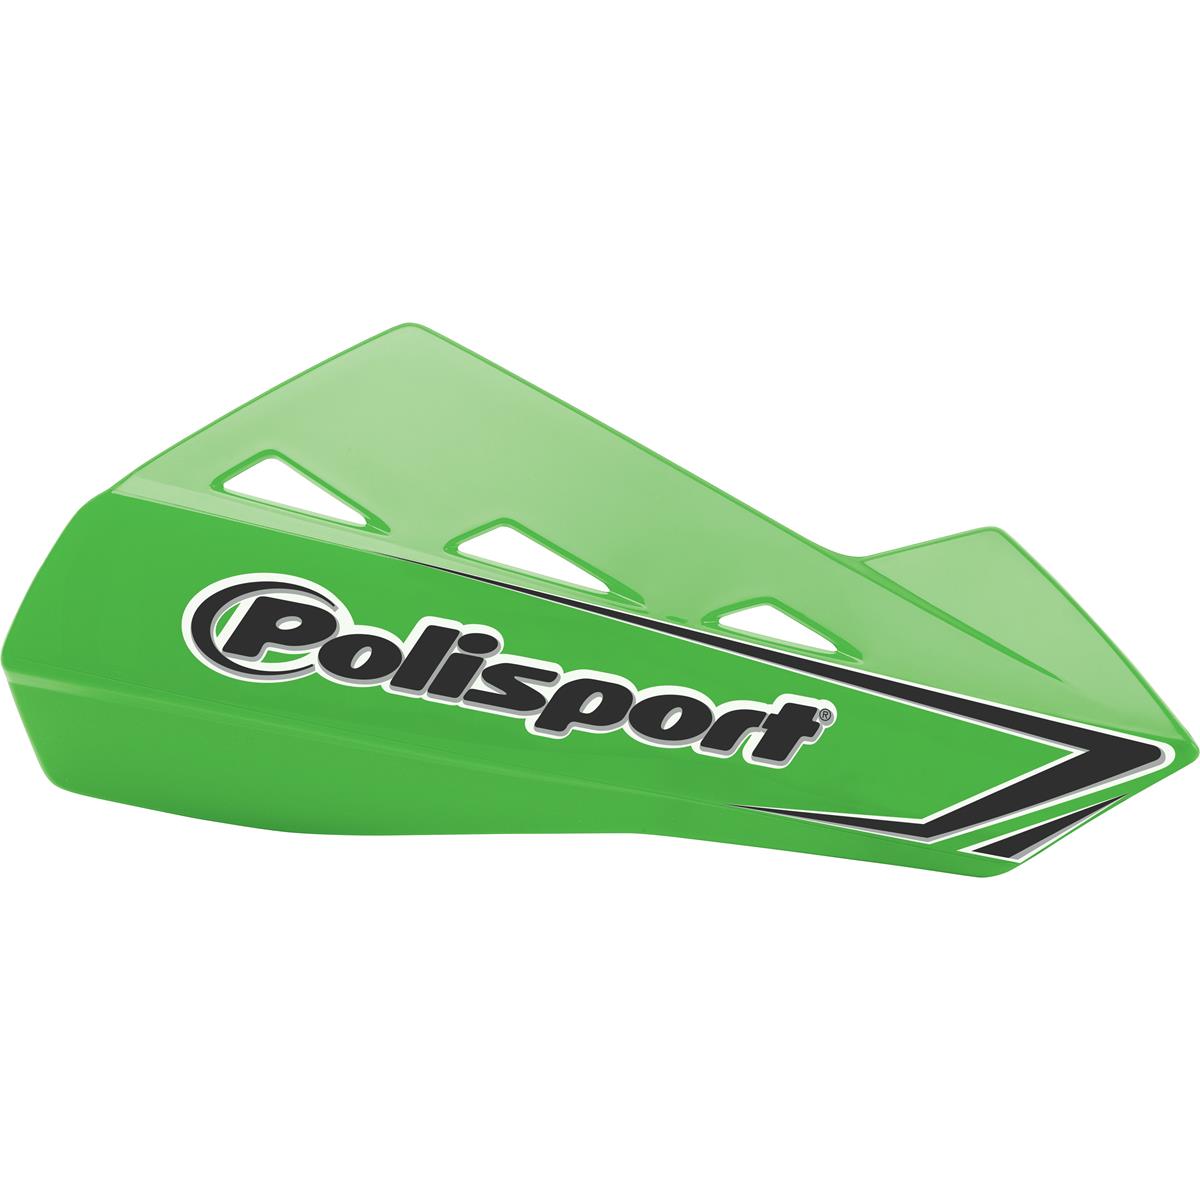 Polisport Handguards Qwest with Aluminium Mounting Kit, Green